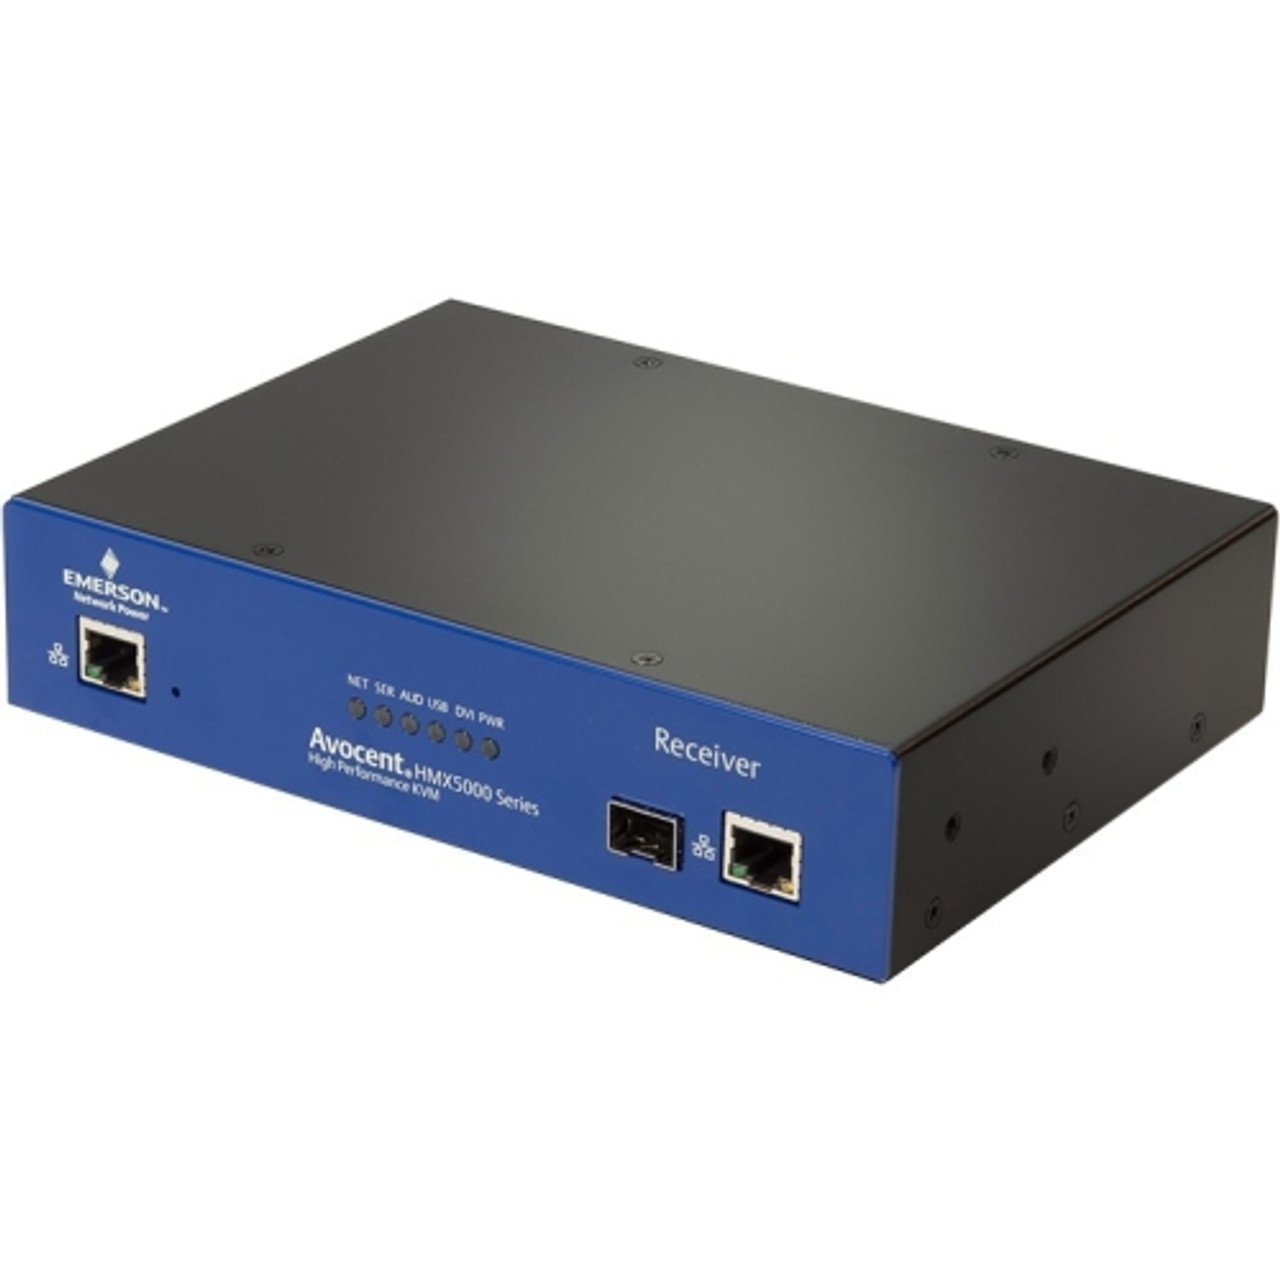 HMX5200R-001 Liebert Avocent Interface Module for Single VGA or DVI-D/USB/ Audio Extender